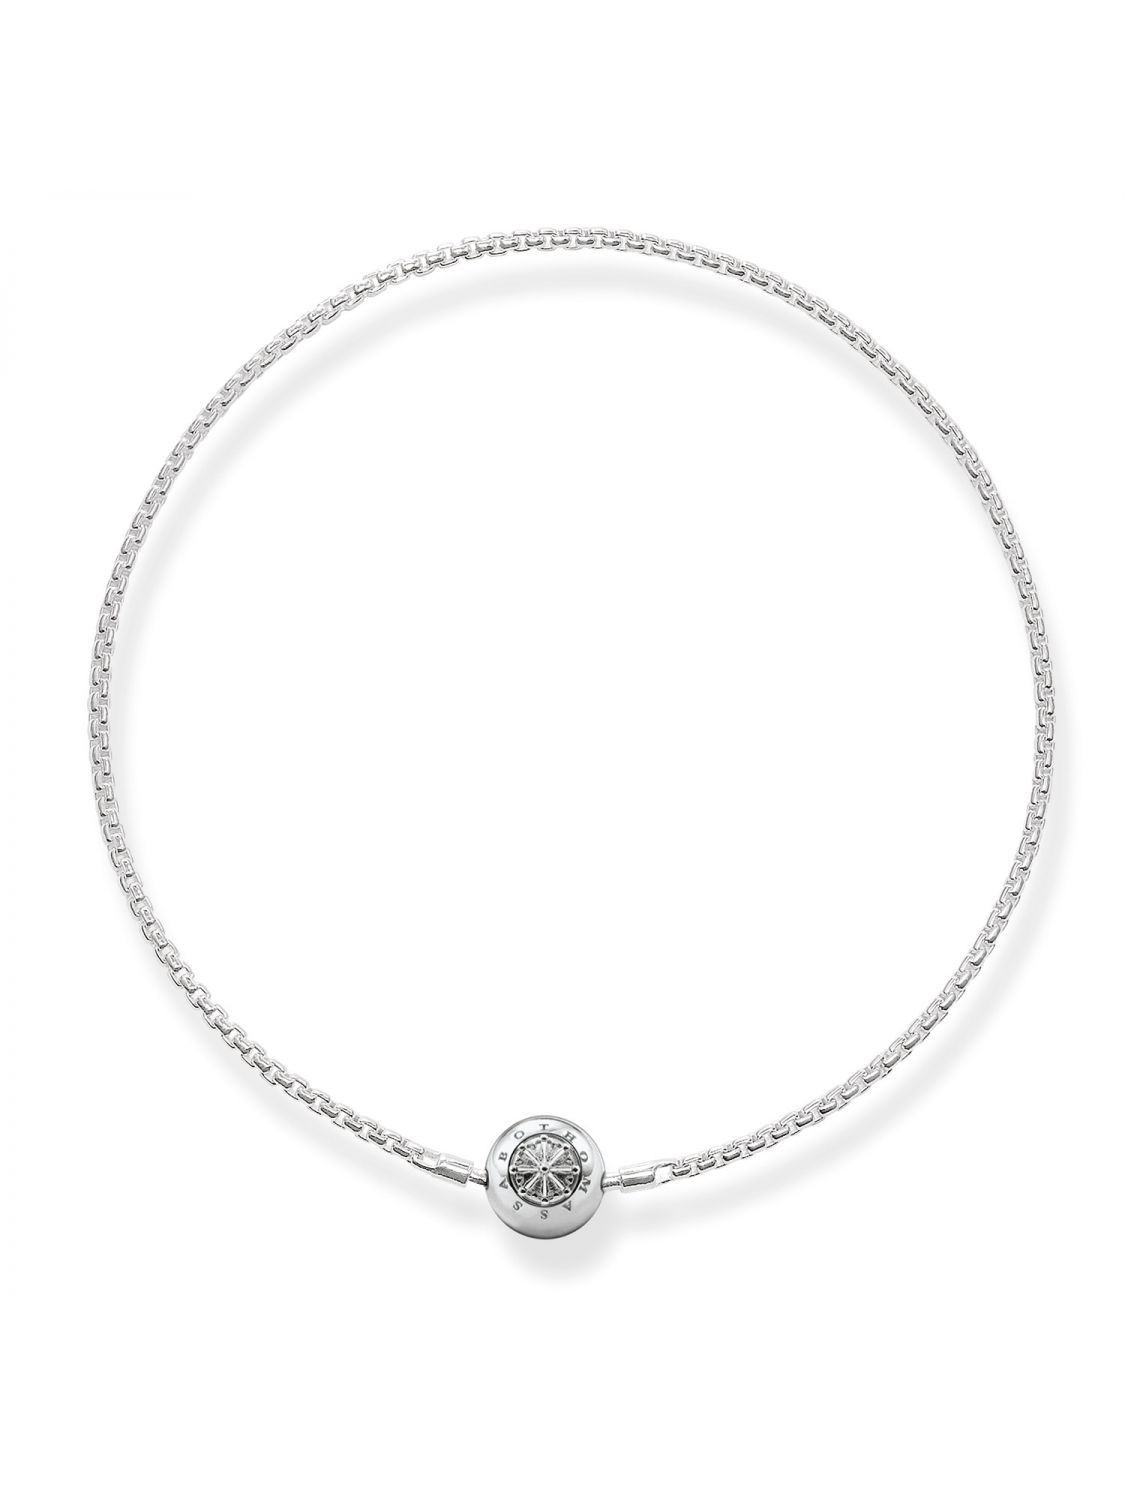 uhrcenter Beads Silber 925 • KK0001-001-12 für Thomas Halskette Karma Sabo